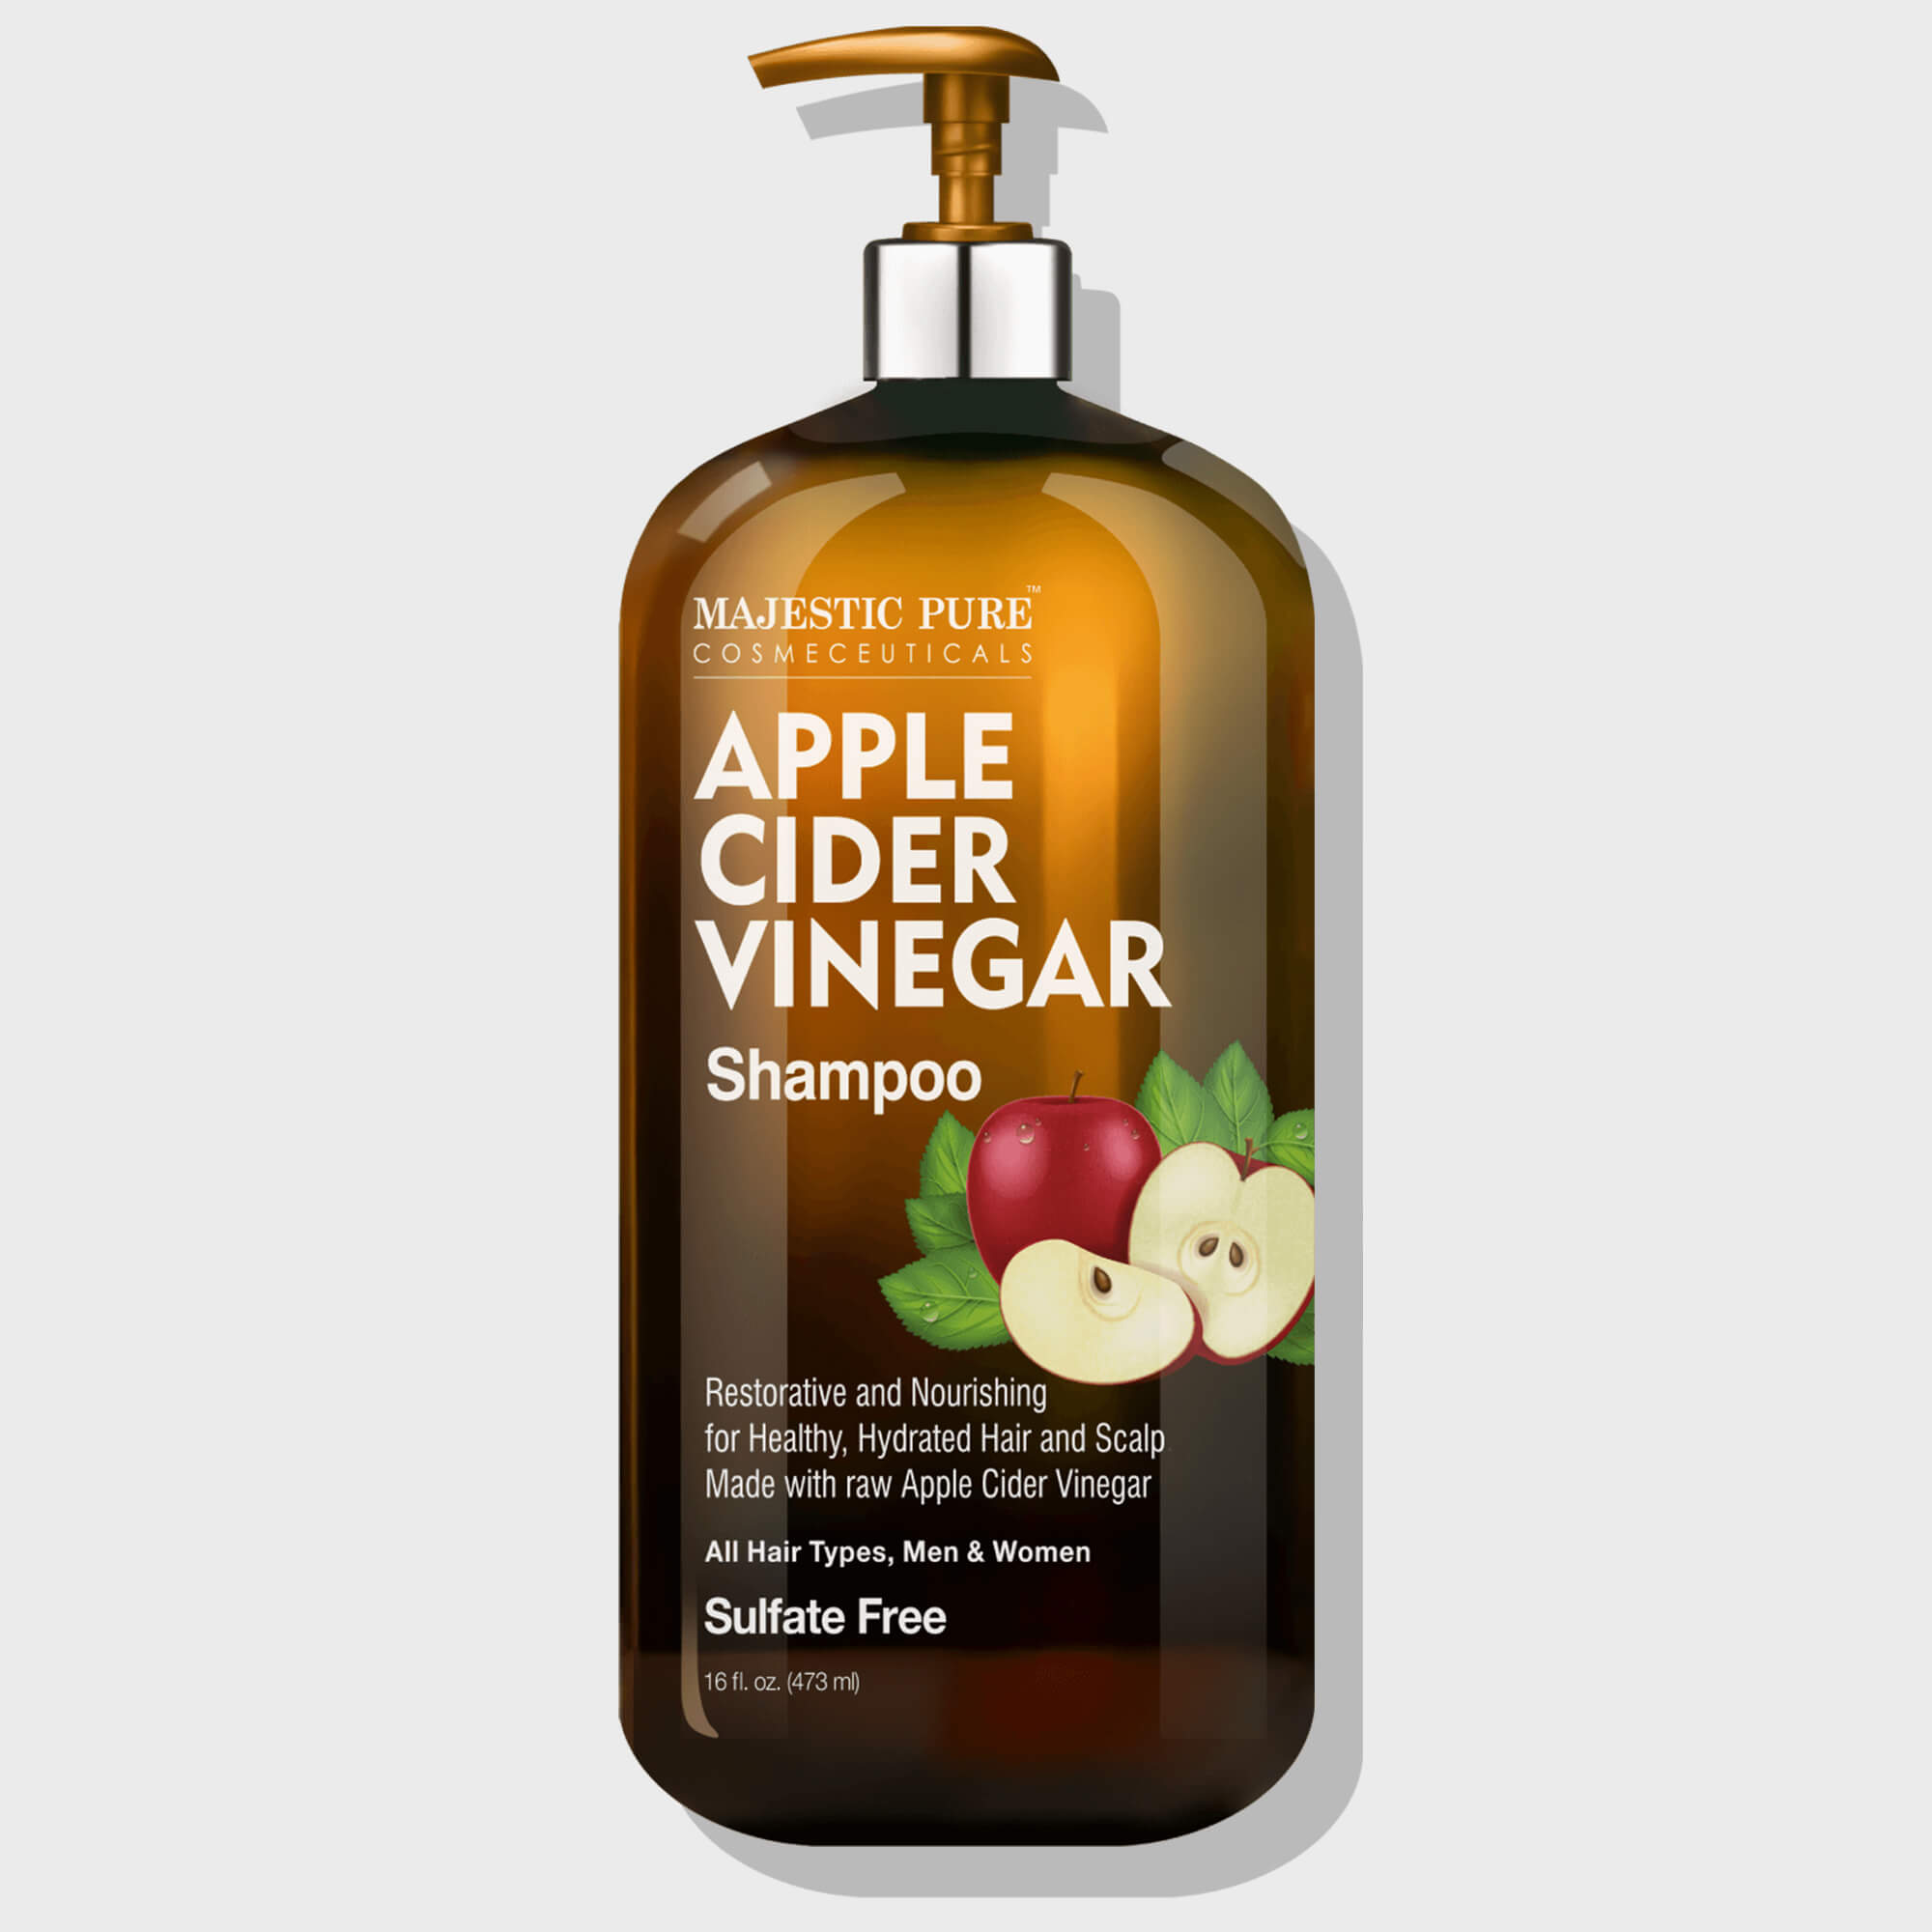 MAJESTIC PURE Apple Cider Vinegar Shampoo